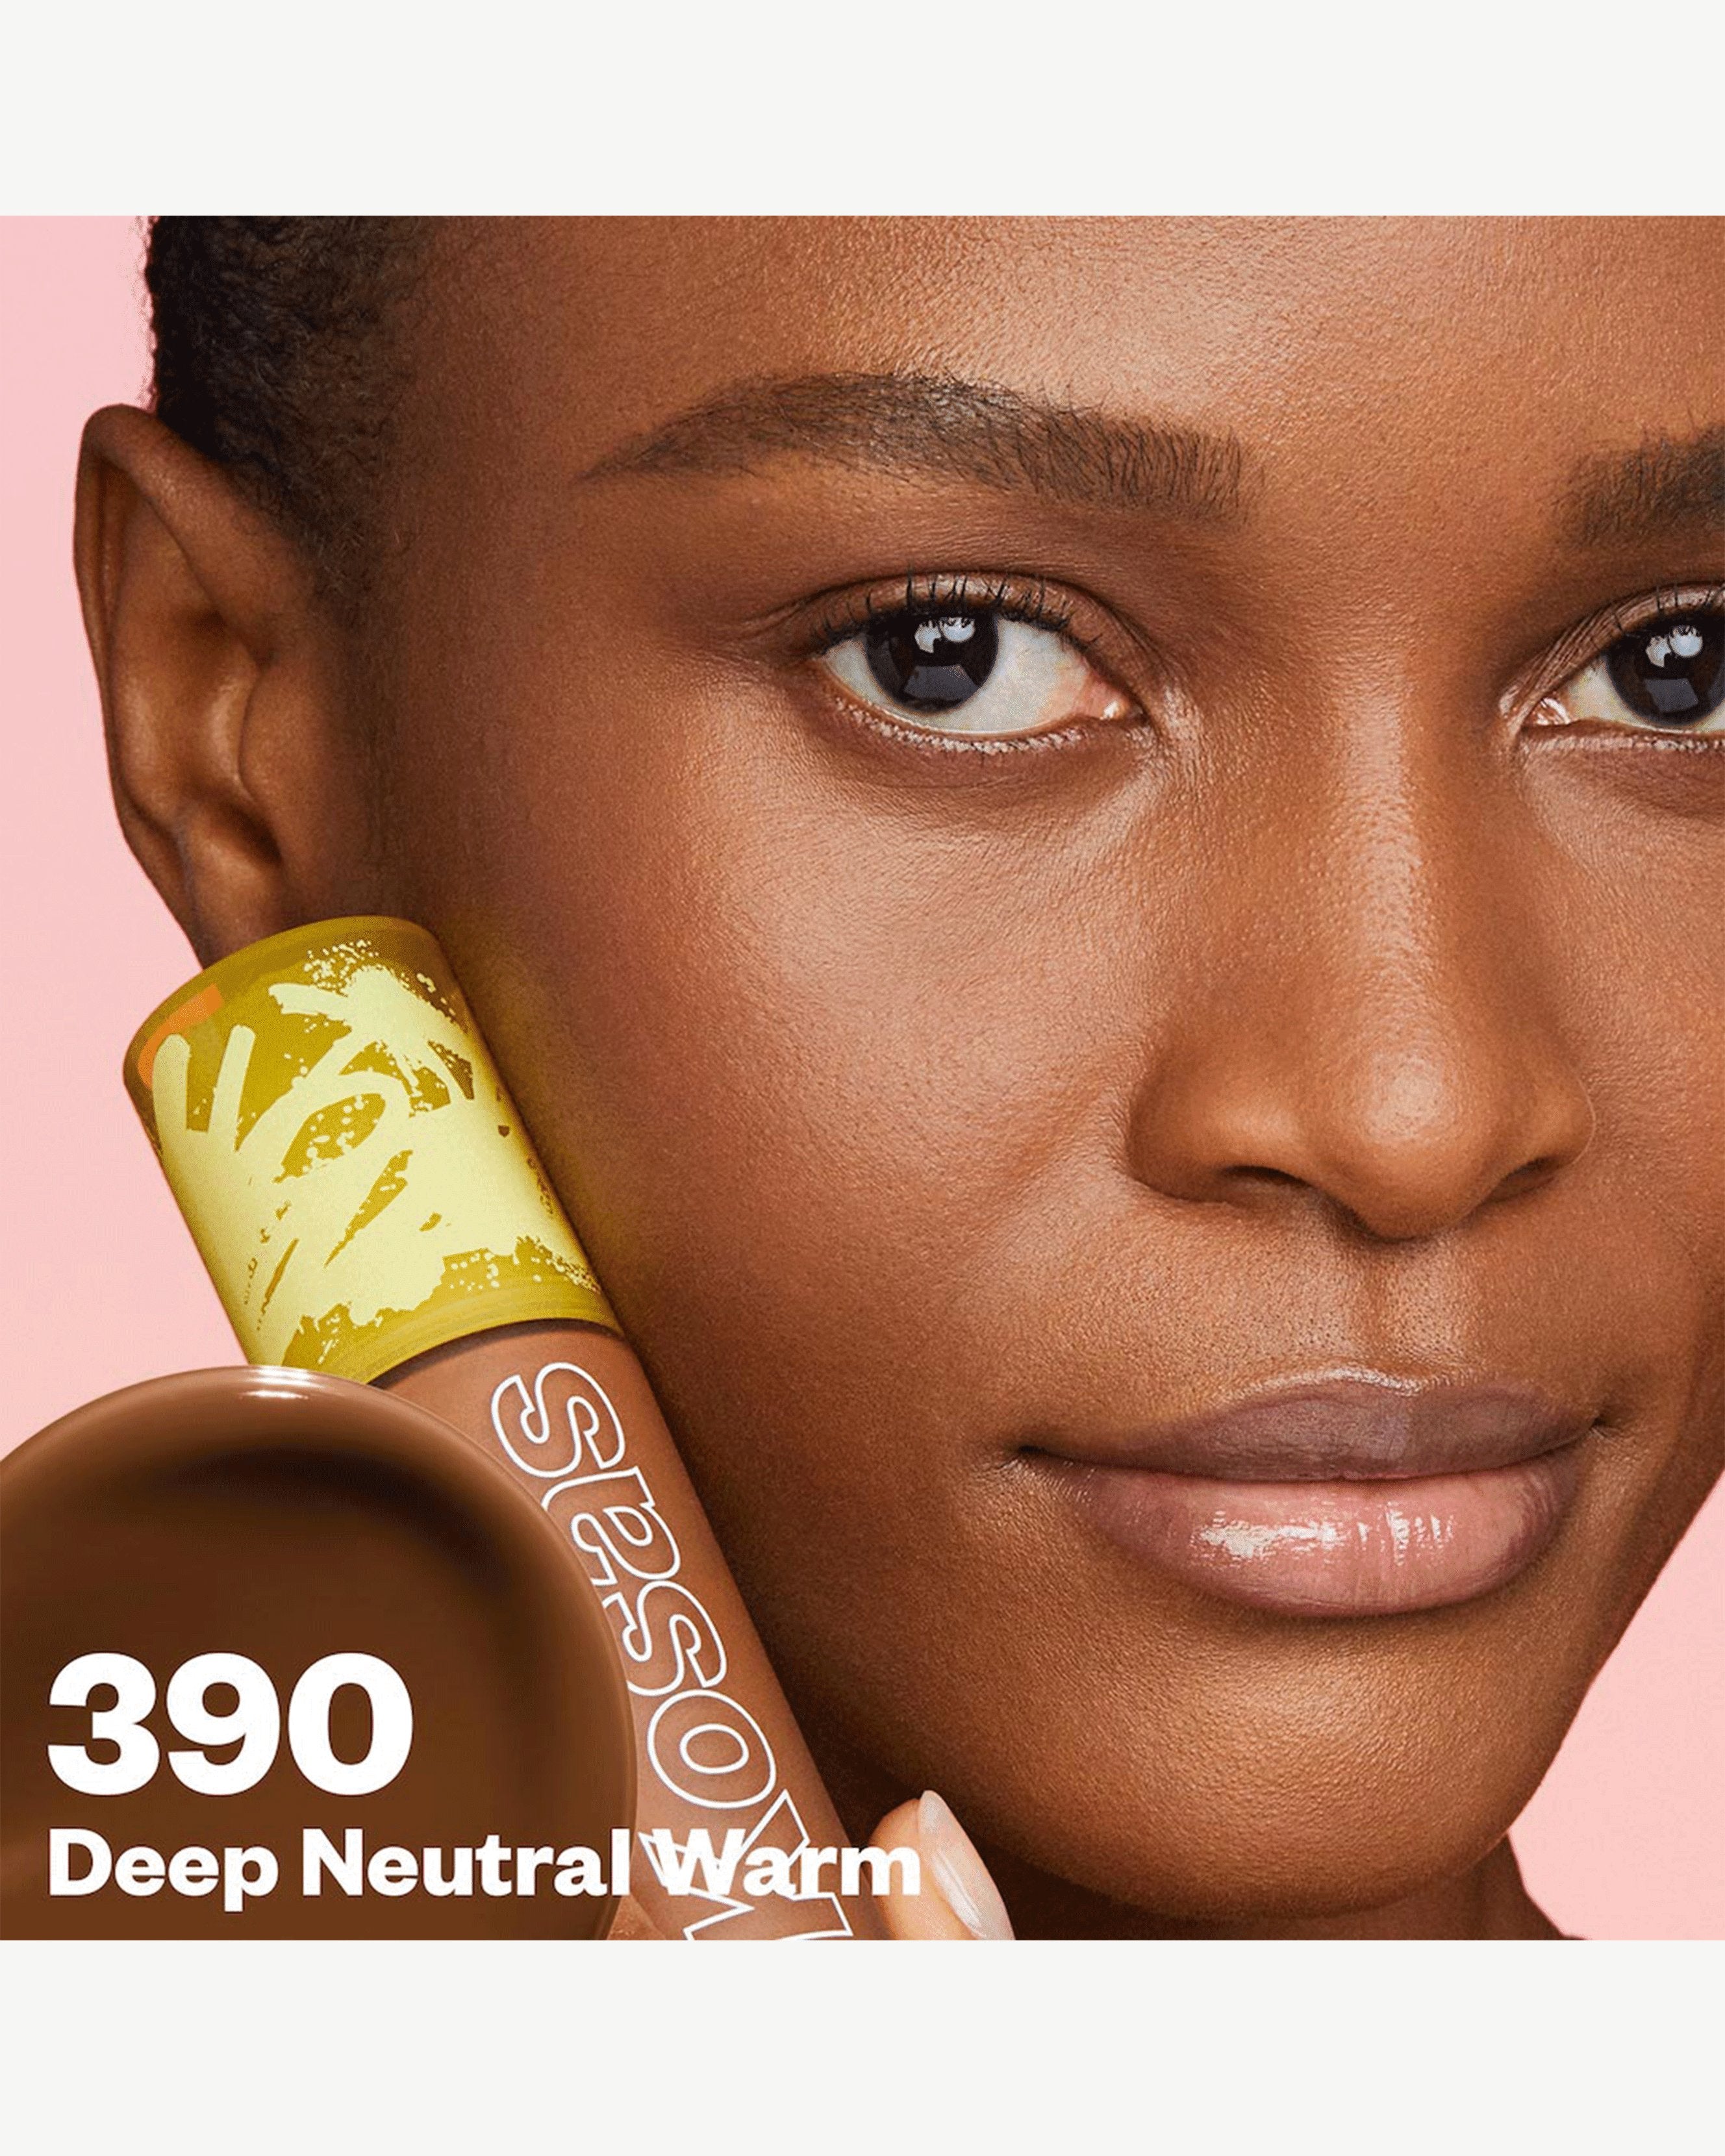 Deep Neutral Warm 390 (deep with neutral warm undertones)